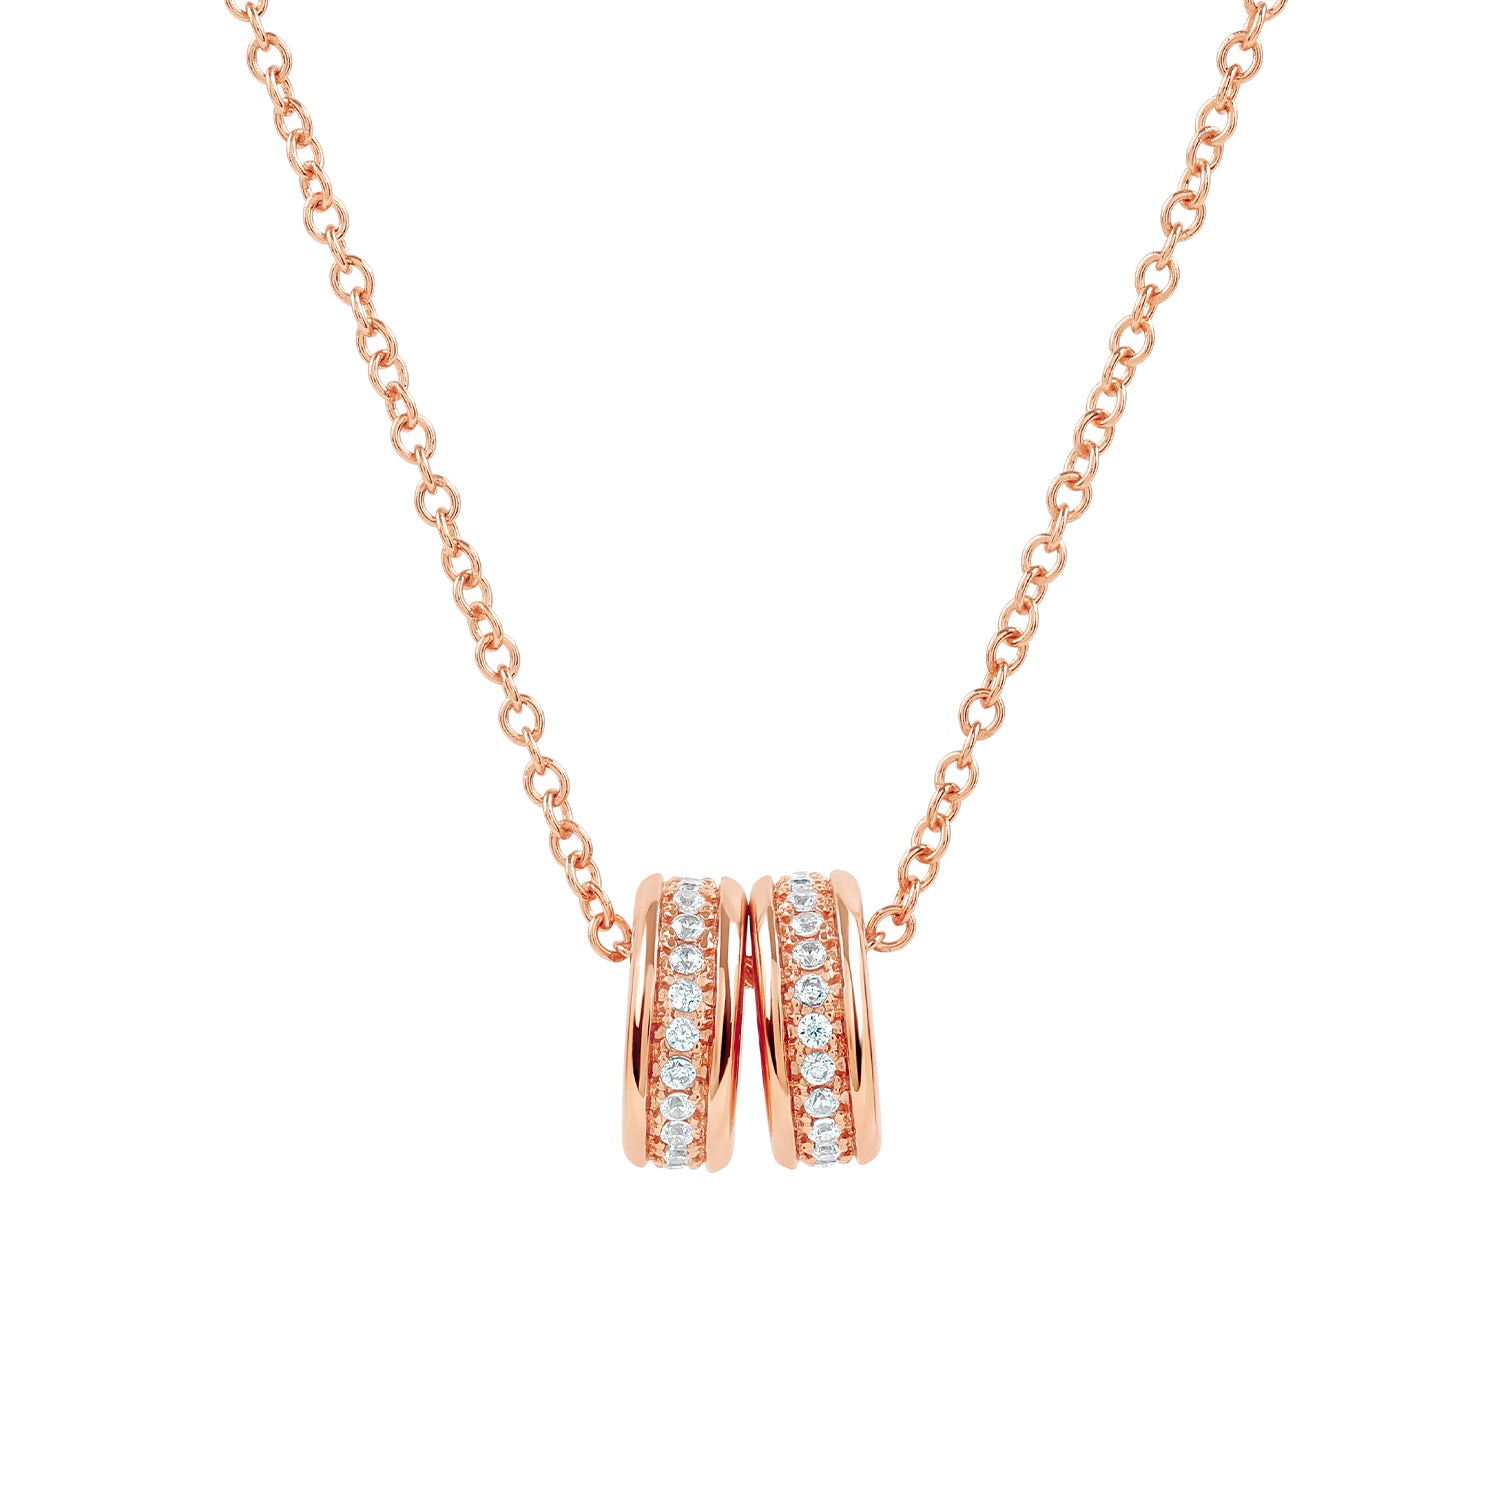 Elegant and minimalist rose gold pendant necklace set with cubic zirconia stones.